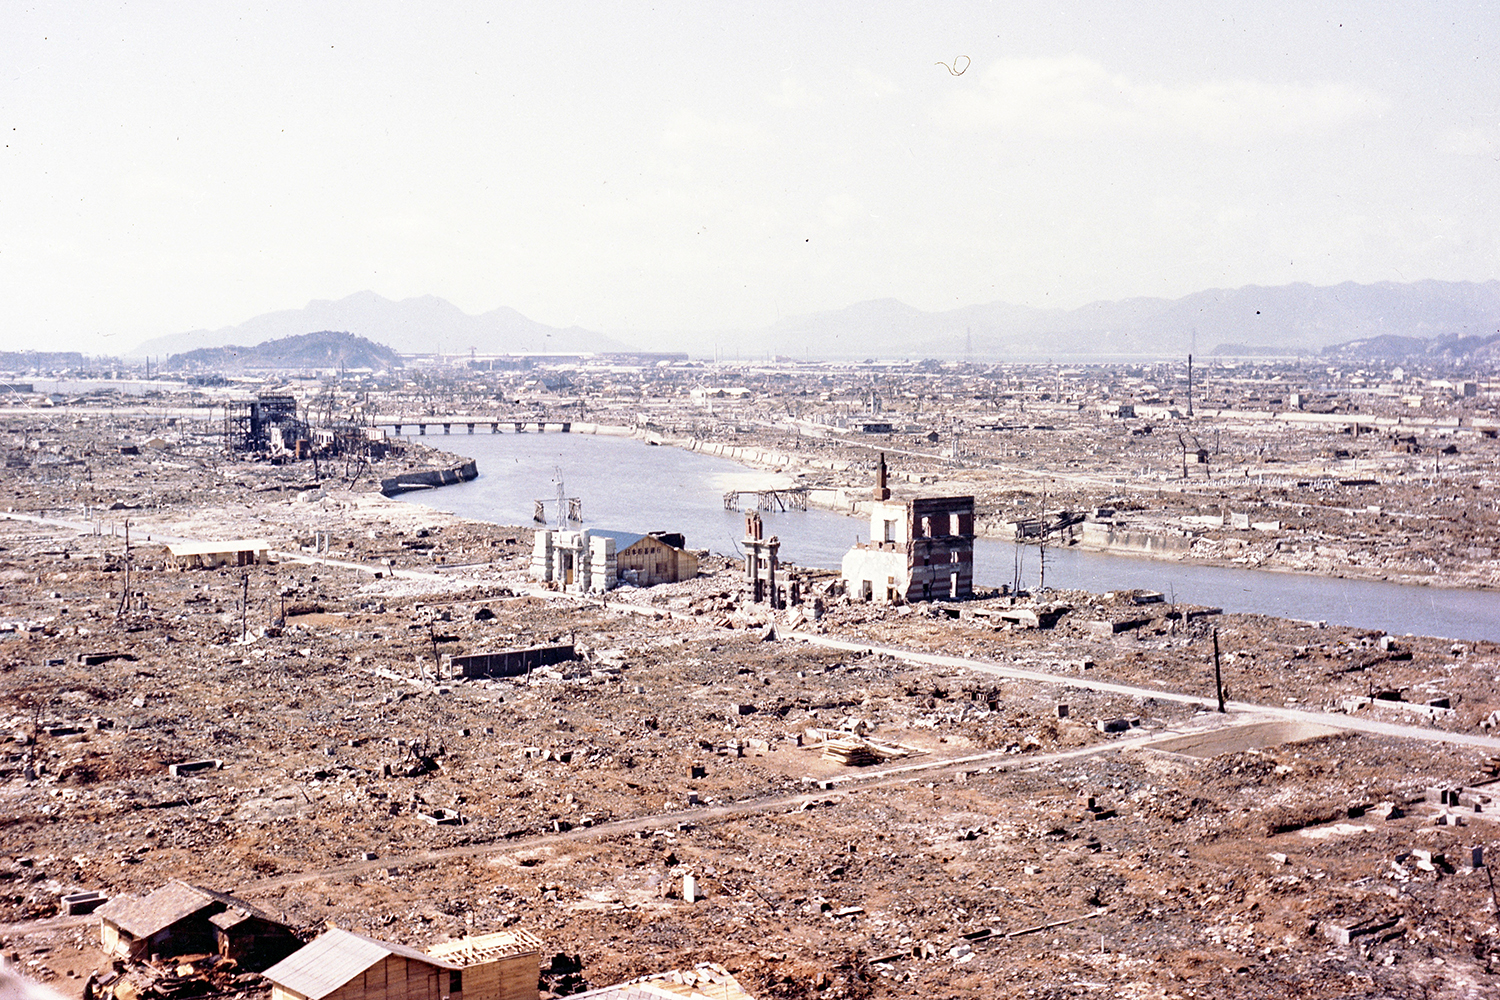 atomic bombings of hiroshima and nagasaki japan